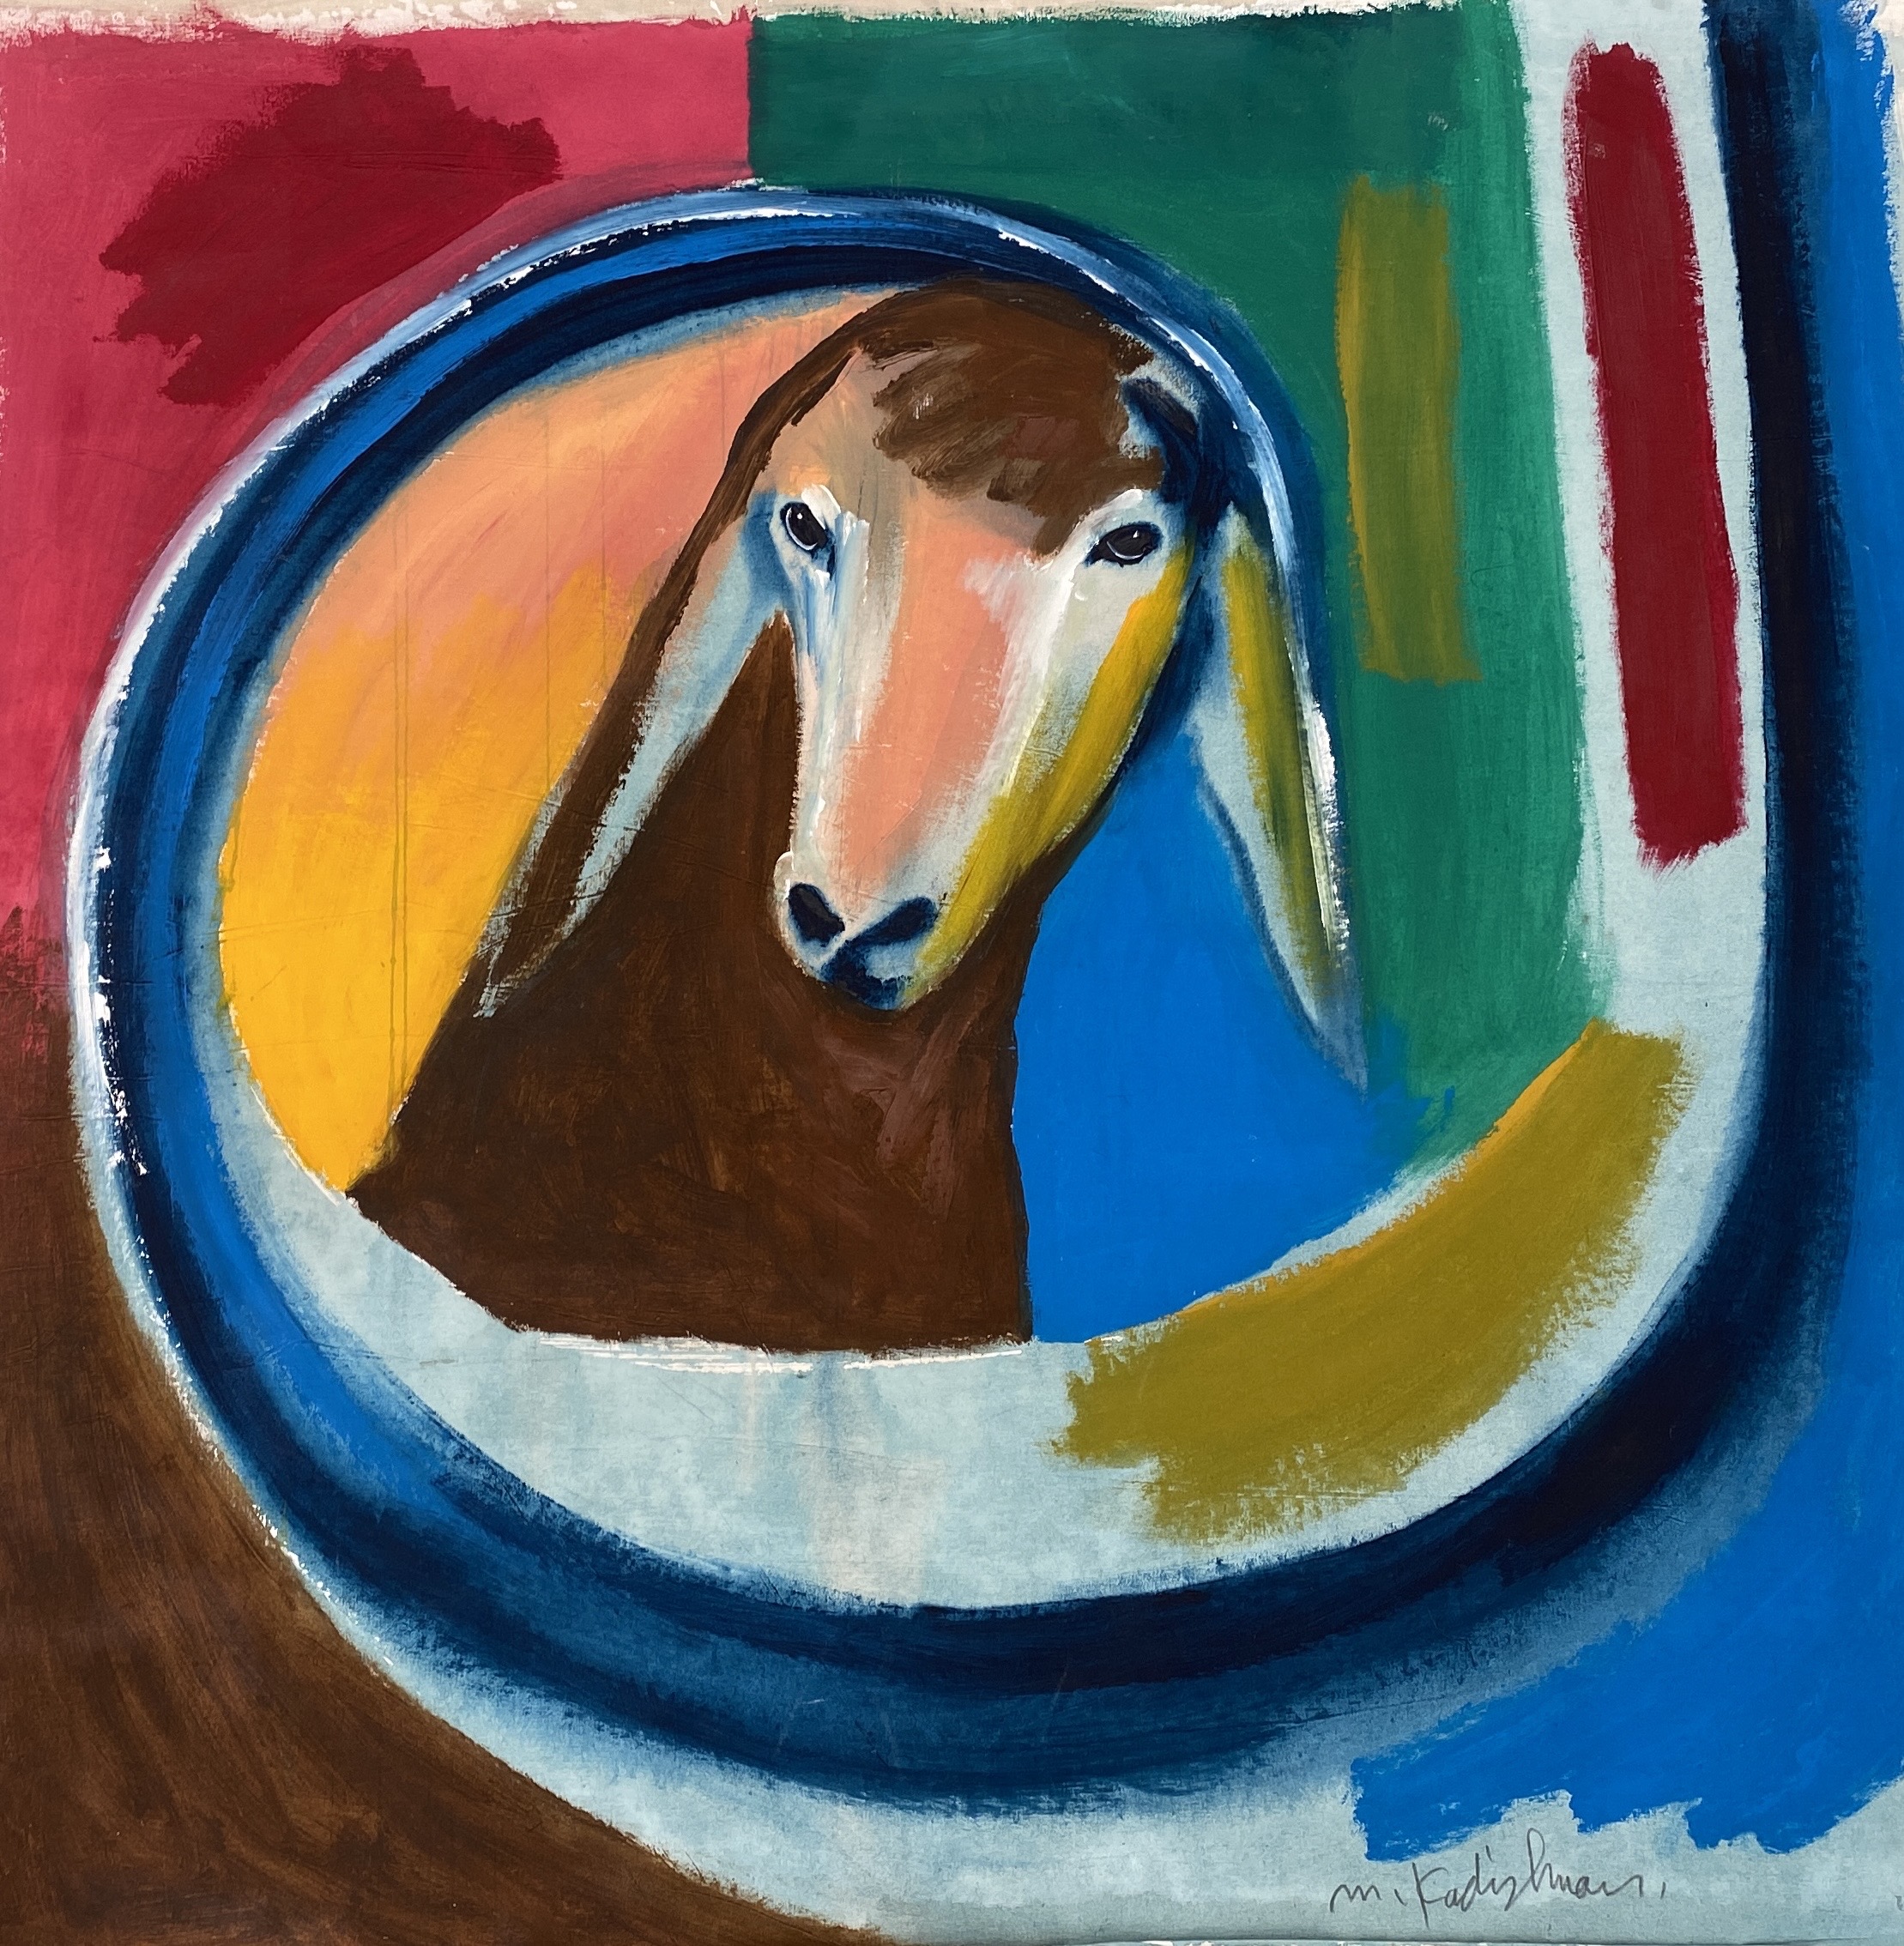 Menashe Kadishman - Colorfull Head Sheep - Shepherd - Israeli artist - Jerusalem - Kings Gallery - Fine Art - Gallery in Jerusalem - Important artist.